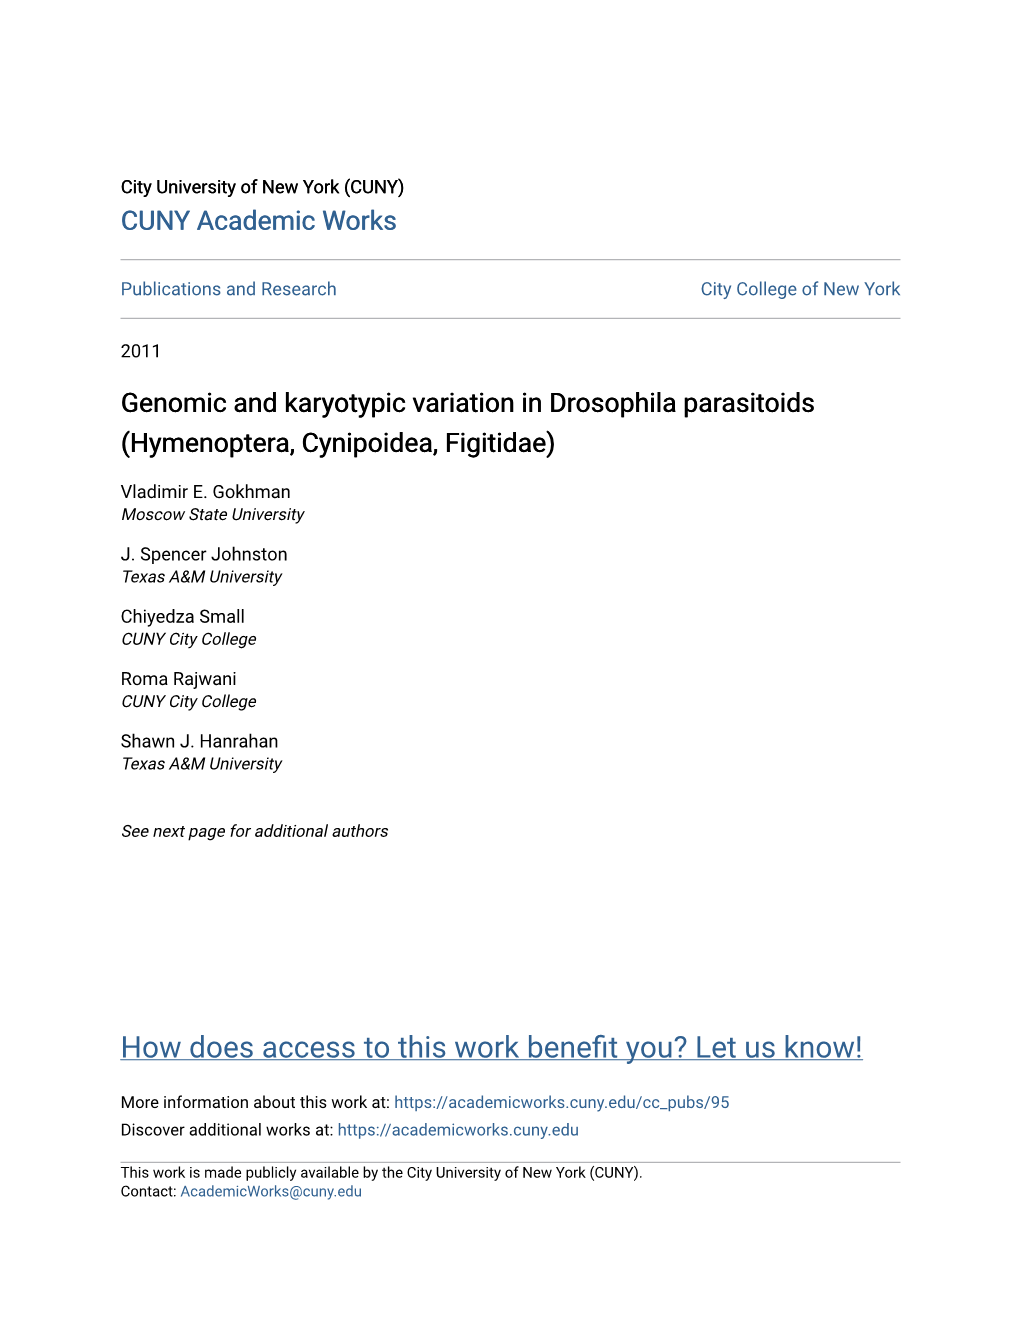 Genomic and Karyotypic Variation in Drosophila Parasitoids (Hymenoptera, Cynipoidea, Figitidae)